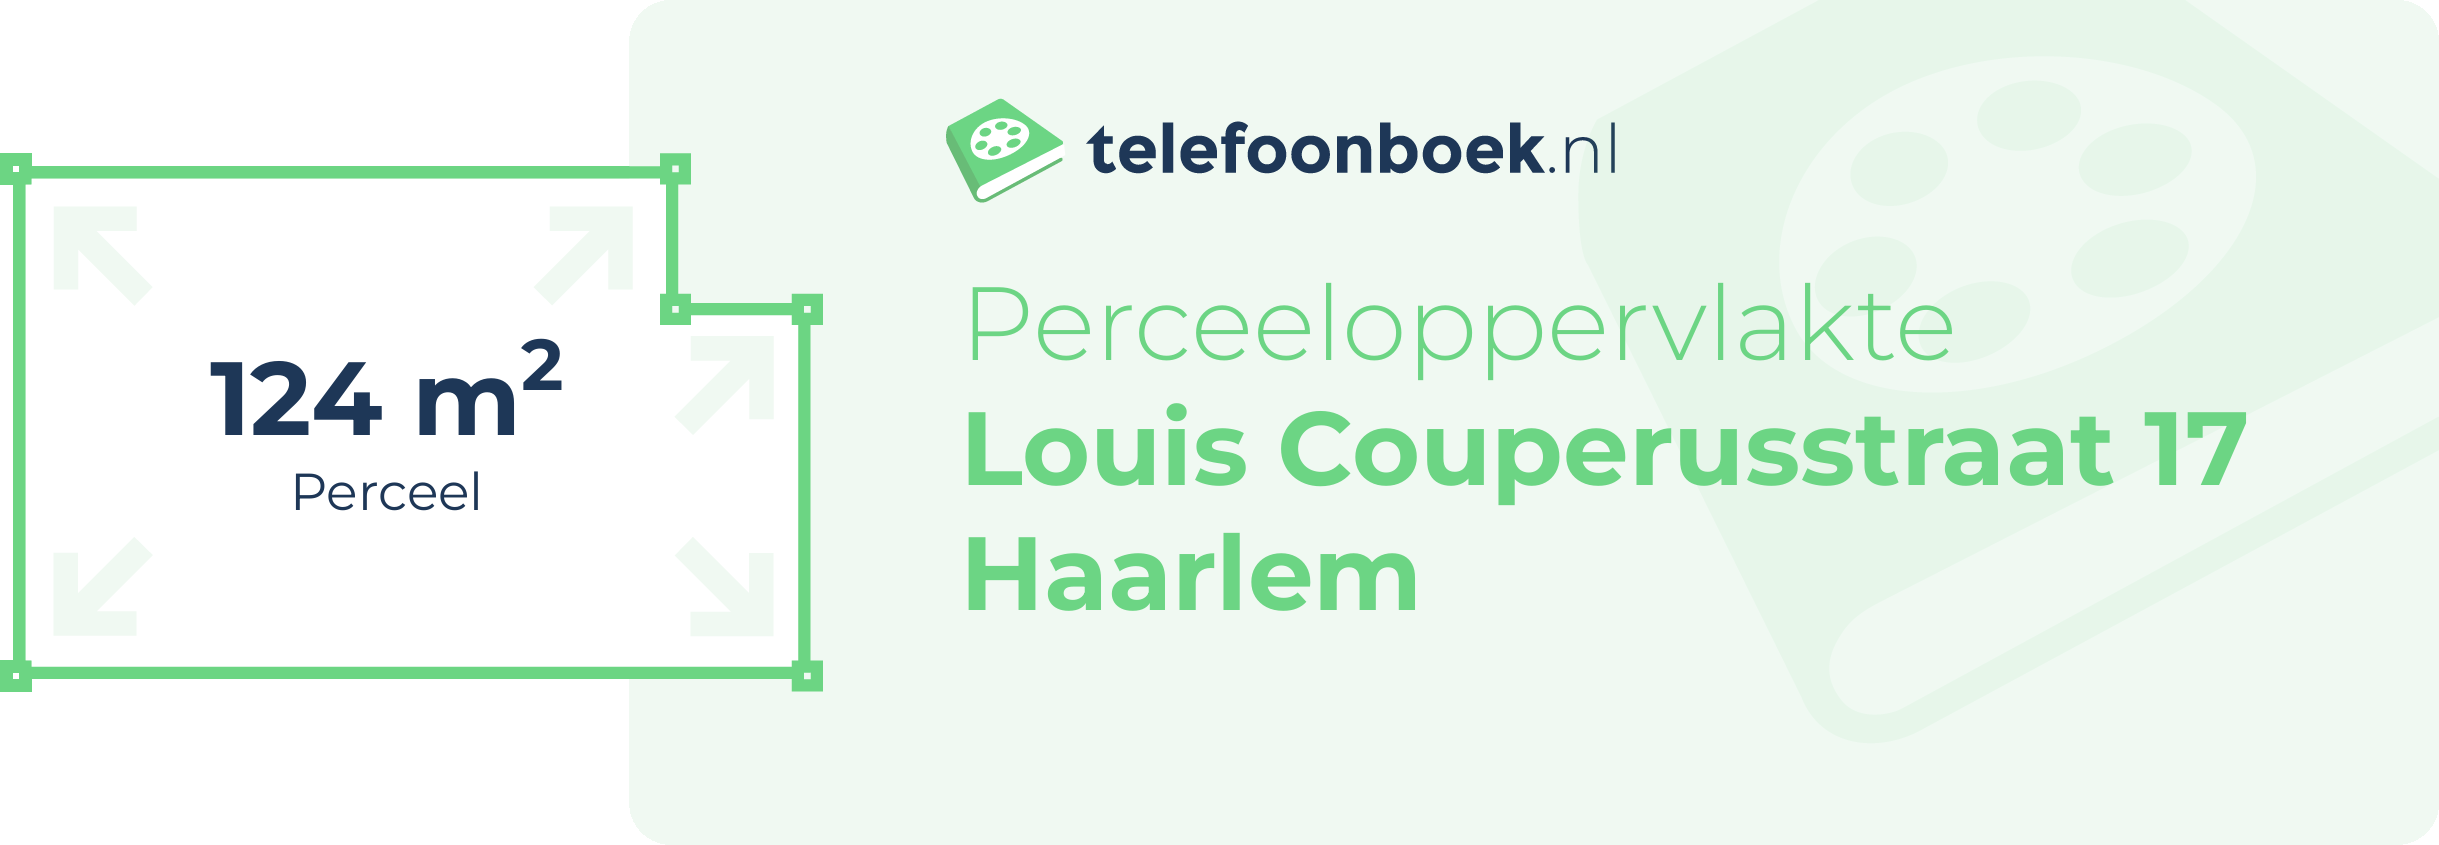 Perceeloppervlakte Louis Couperusstraat 17 Haarlem